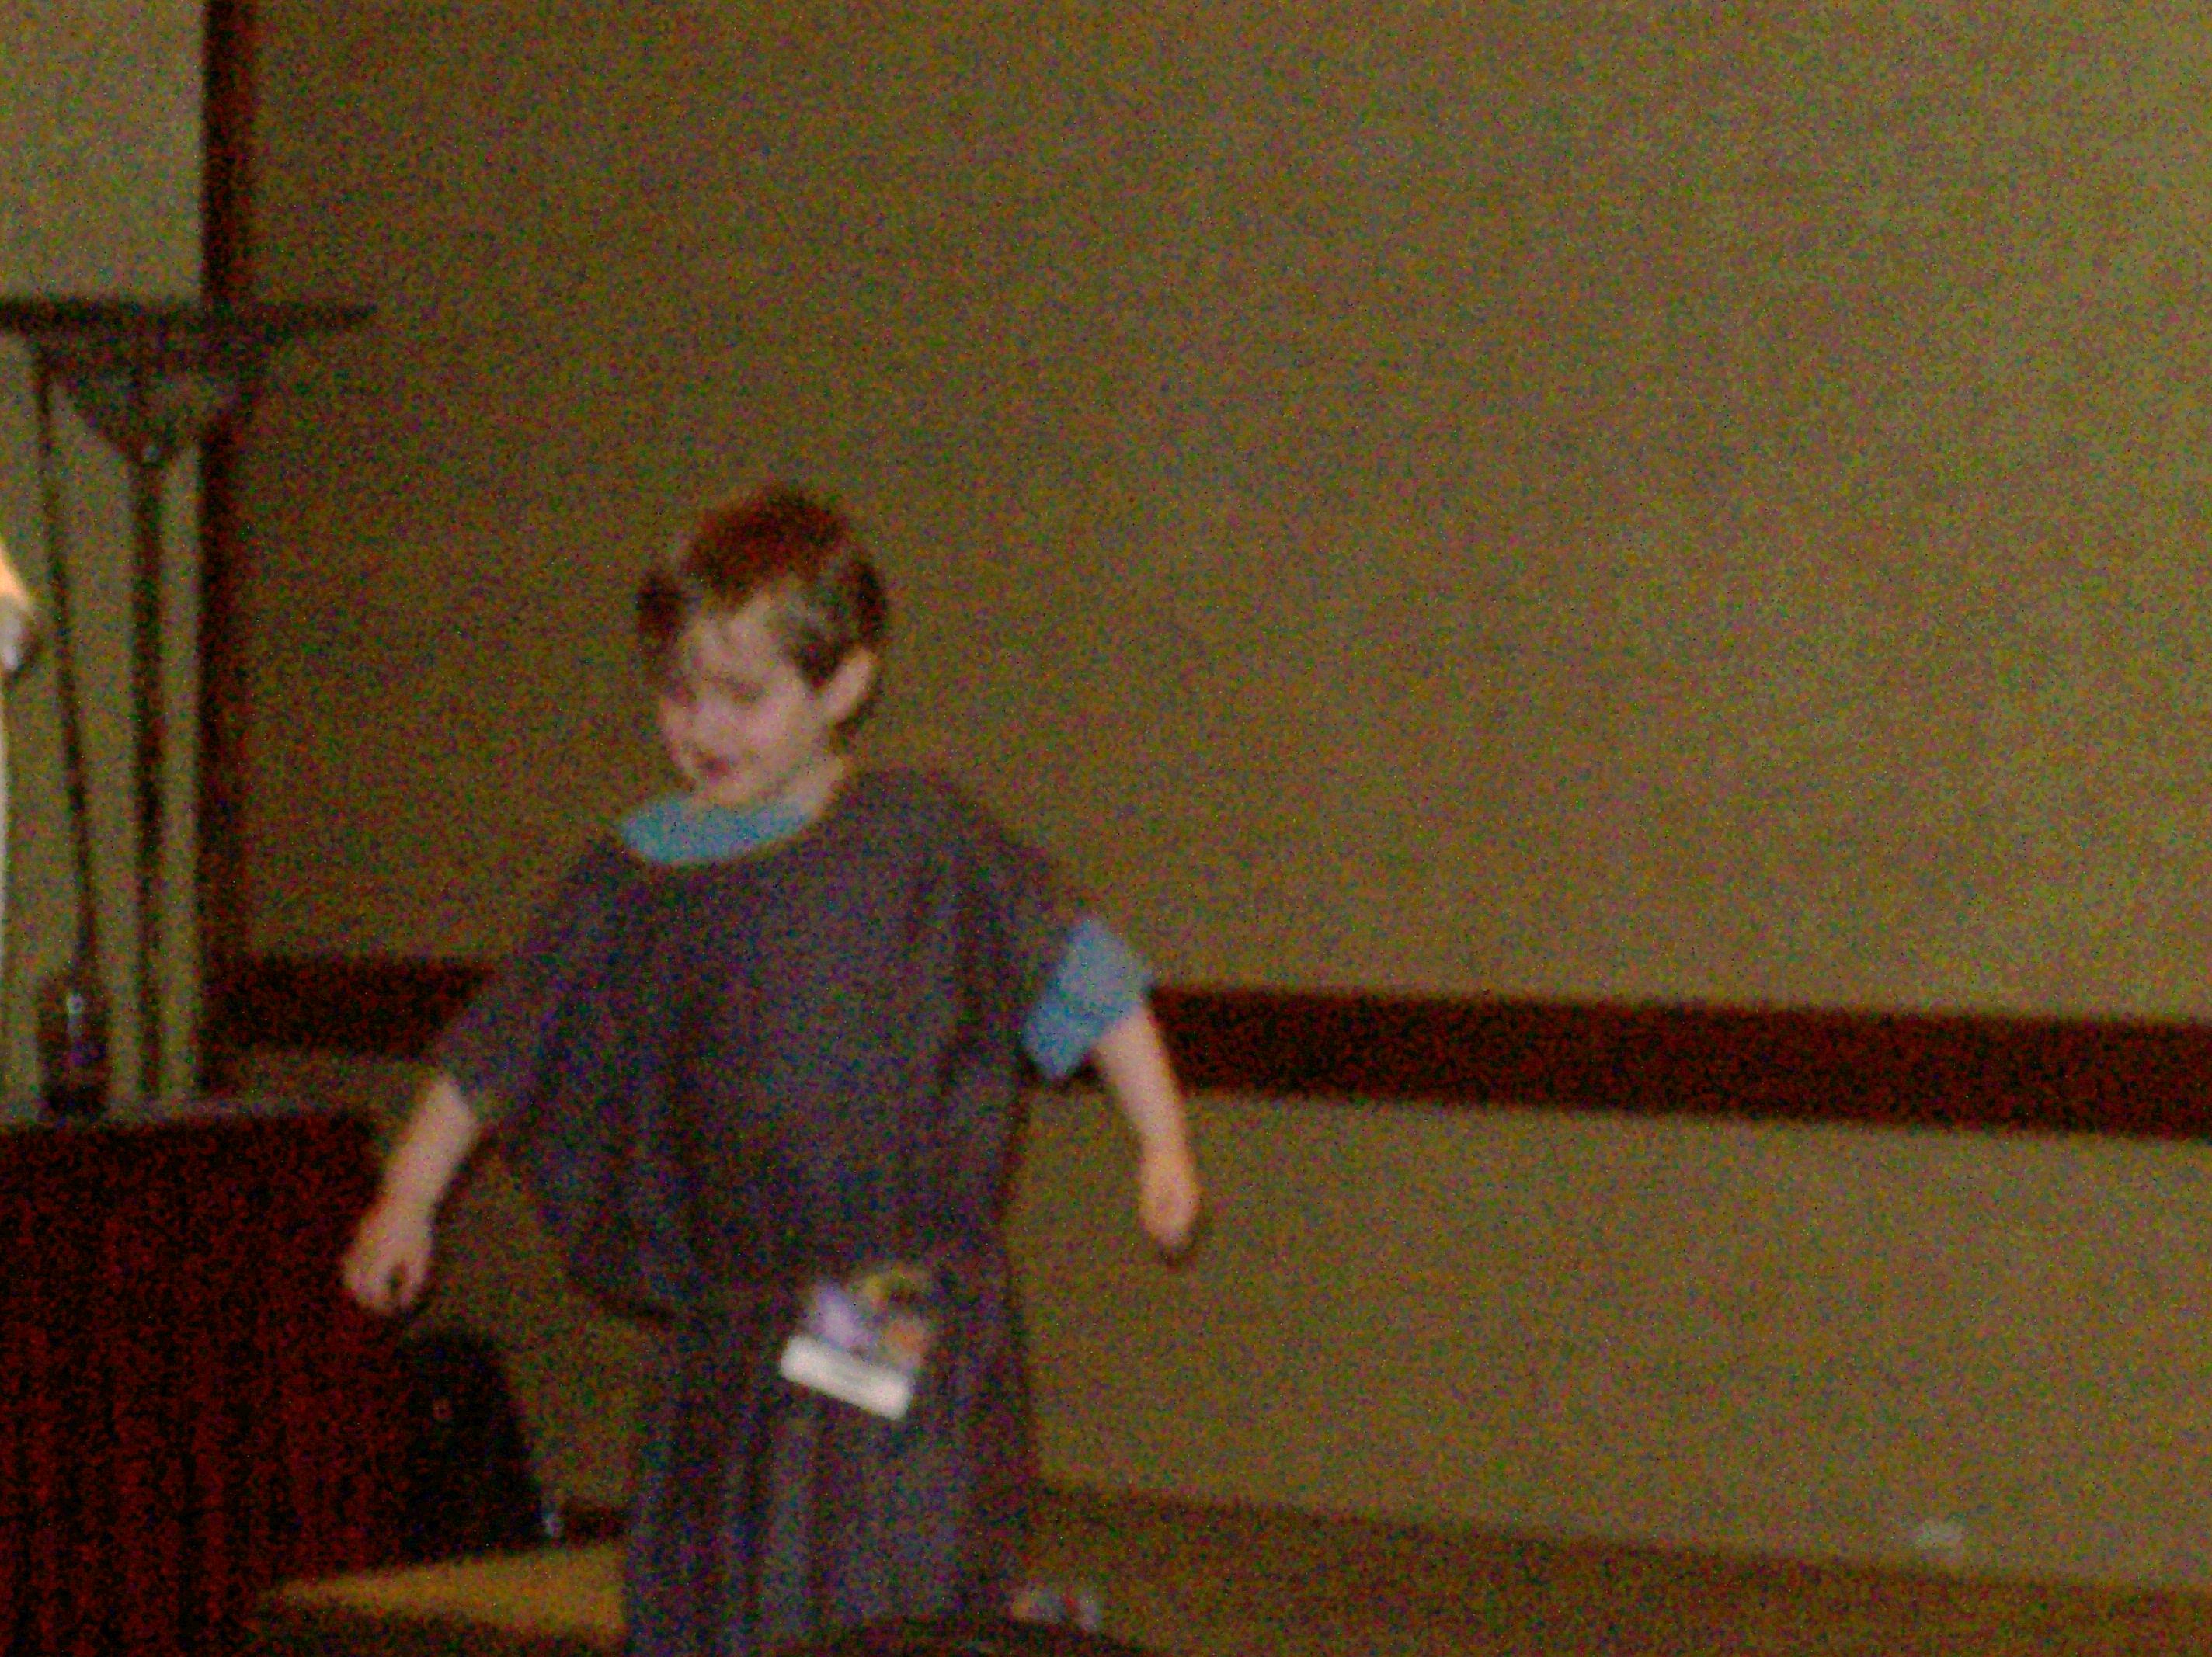 Little Boy Walking Down The Stage